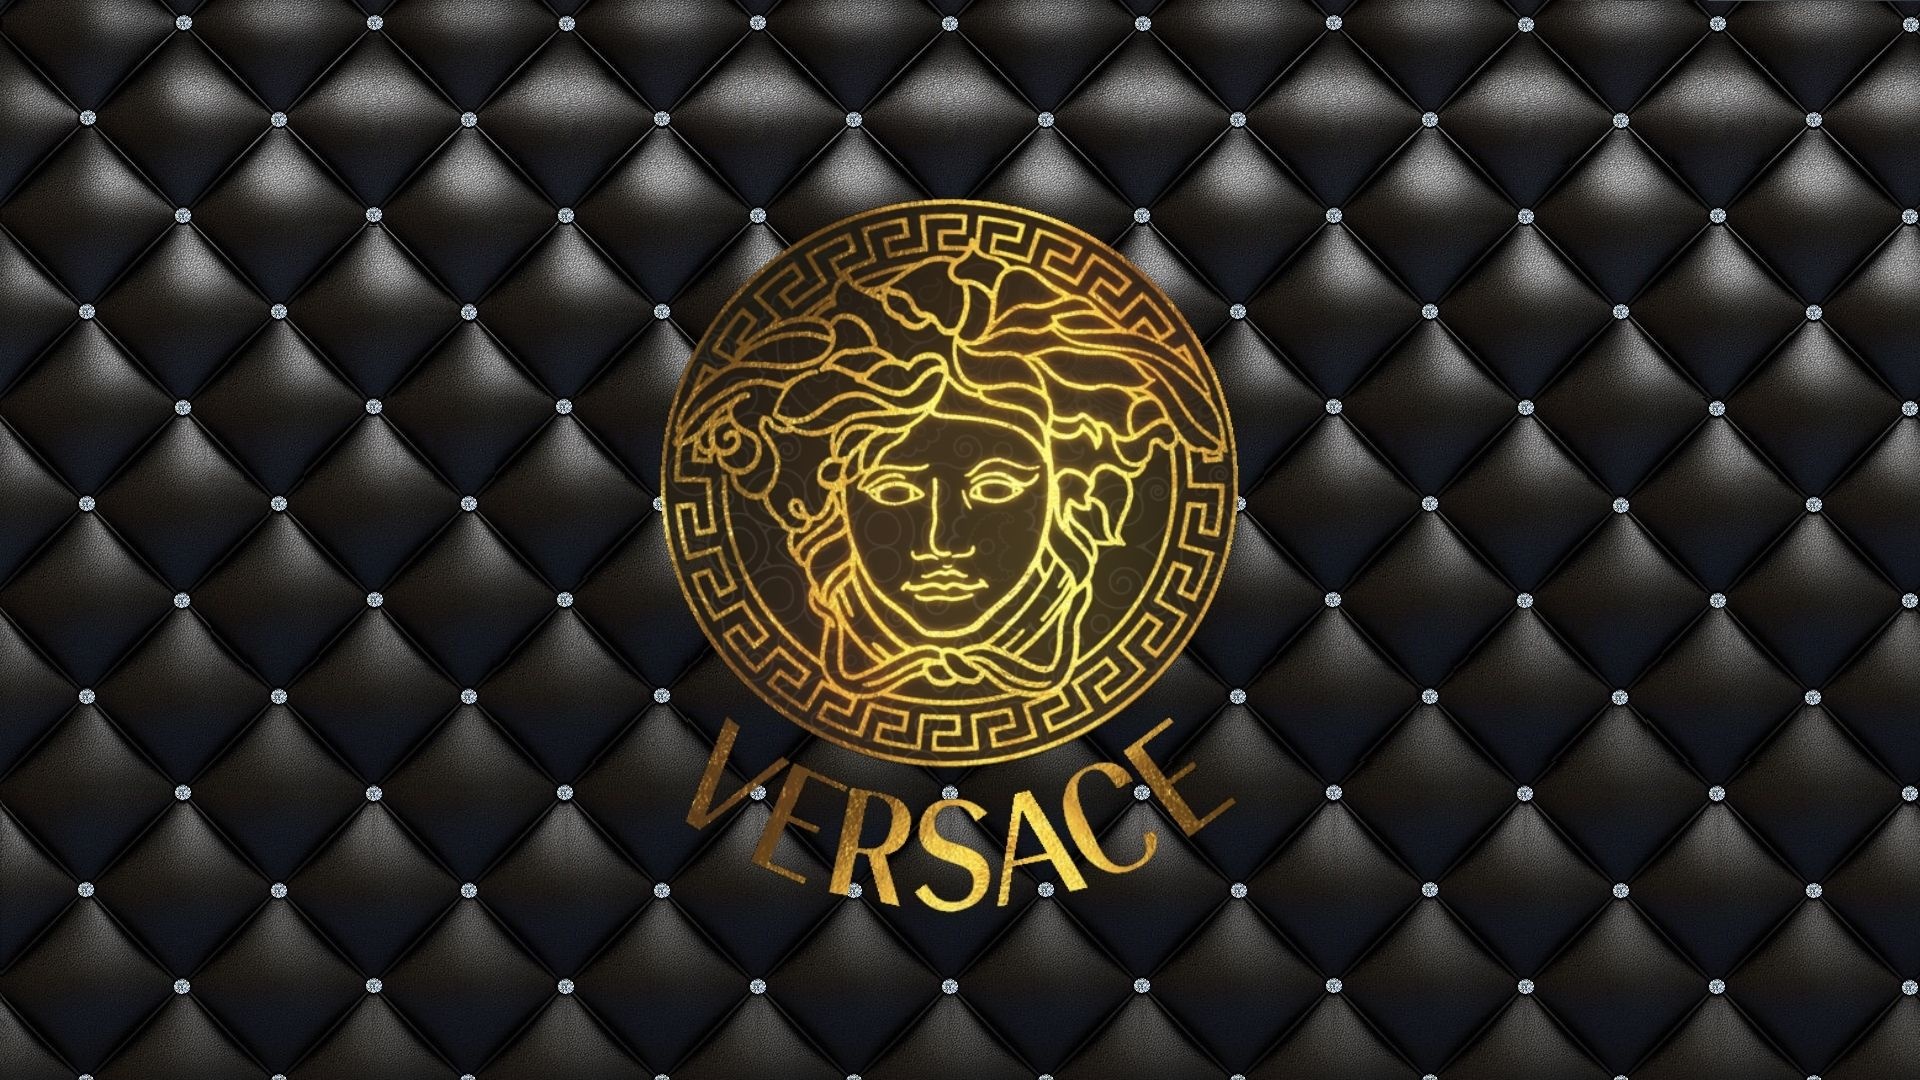 Versace: The eponymous luxury brand, Logotype. 1920x1080 Full HD Wallpaper.